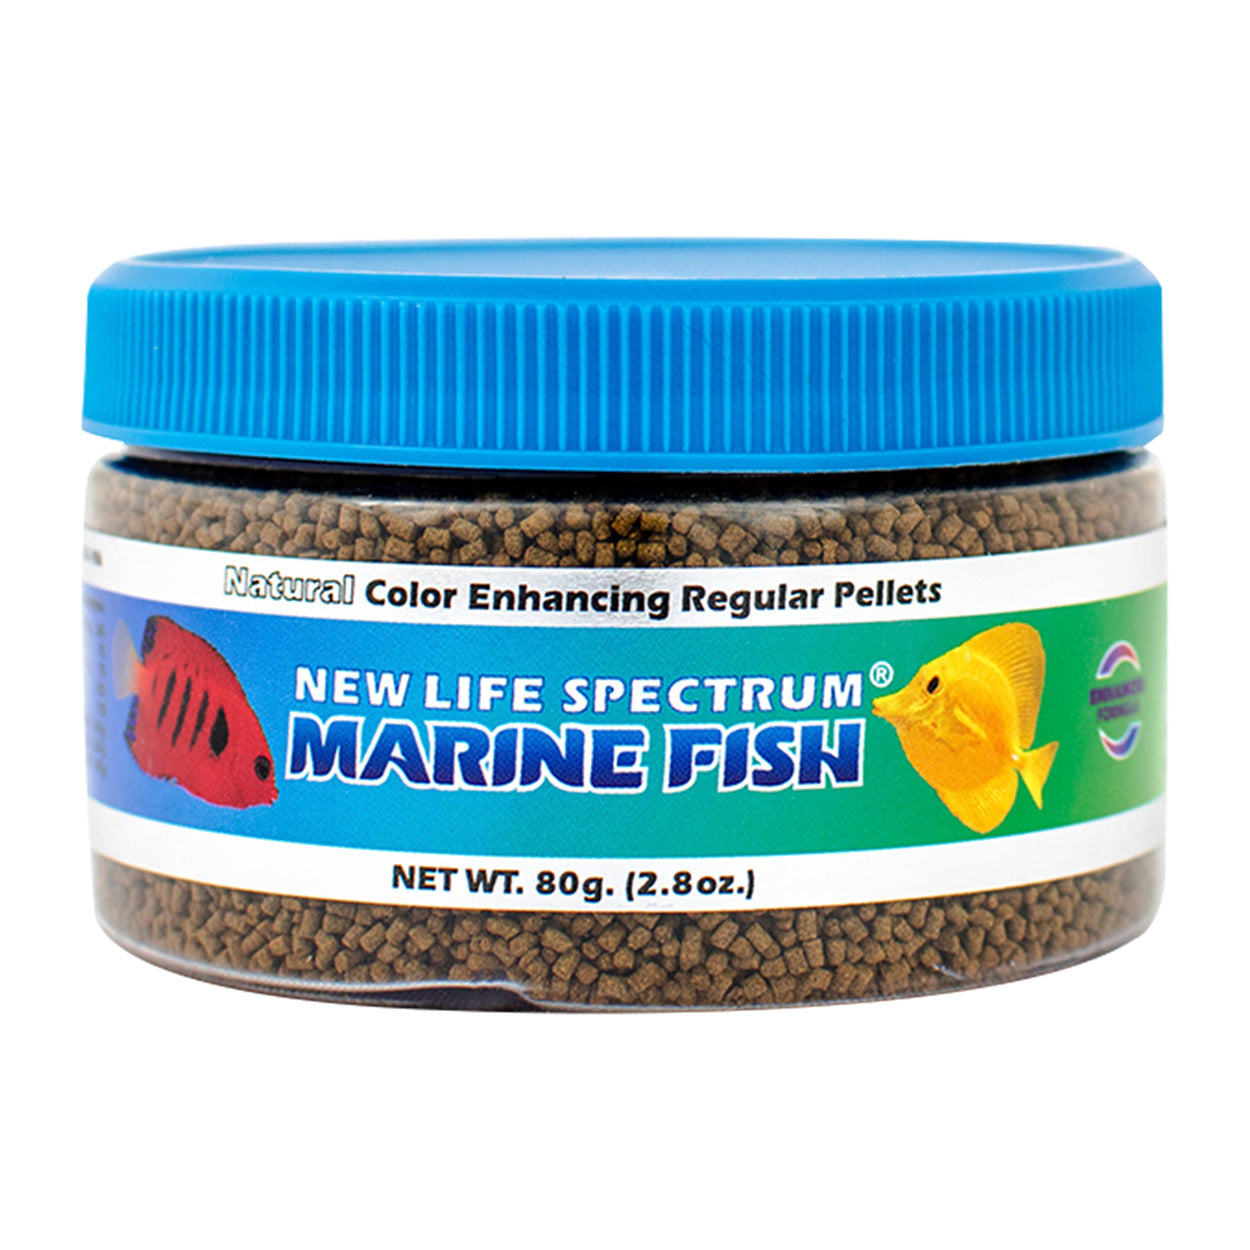 New Life Spectrum Naturox Marine Fish Sinking Pellets - 1 - 1.5 mm - 80 g